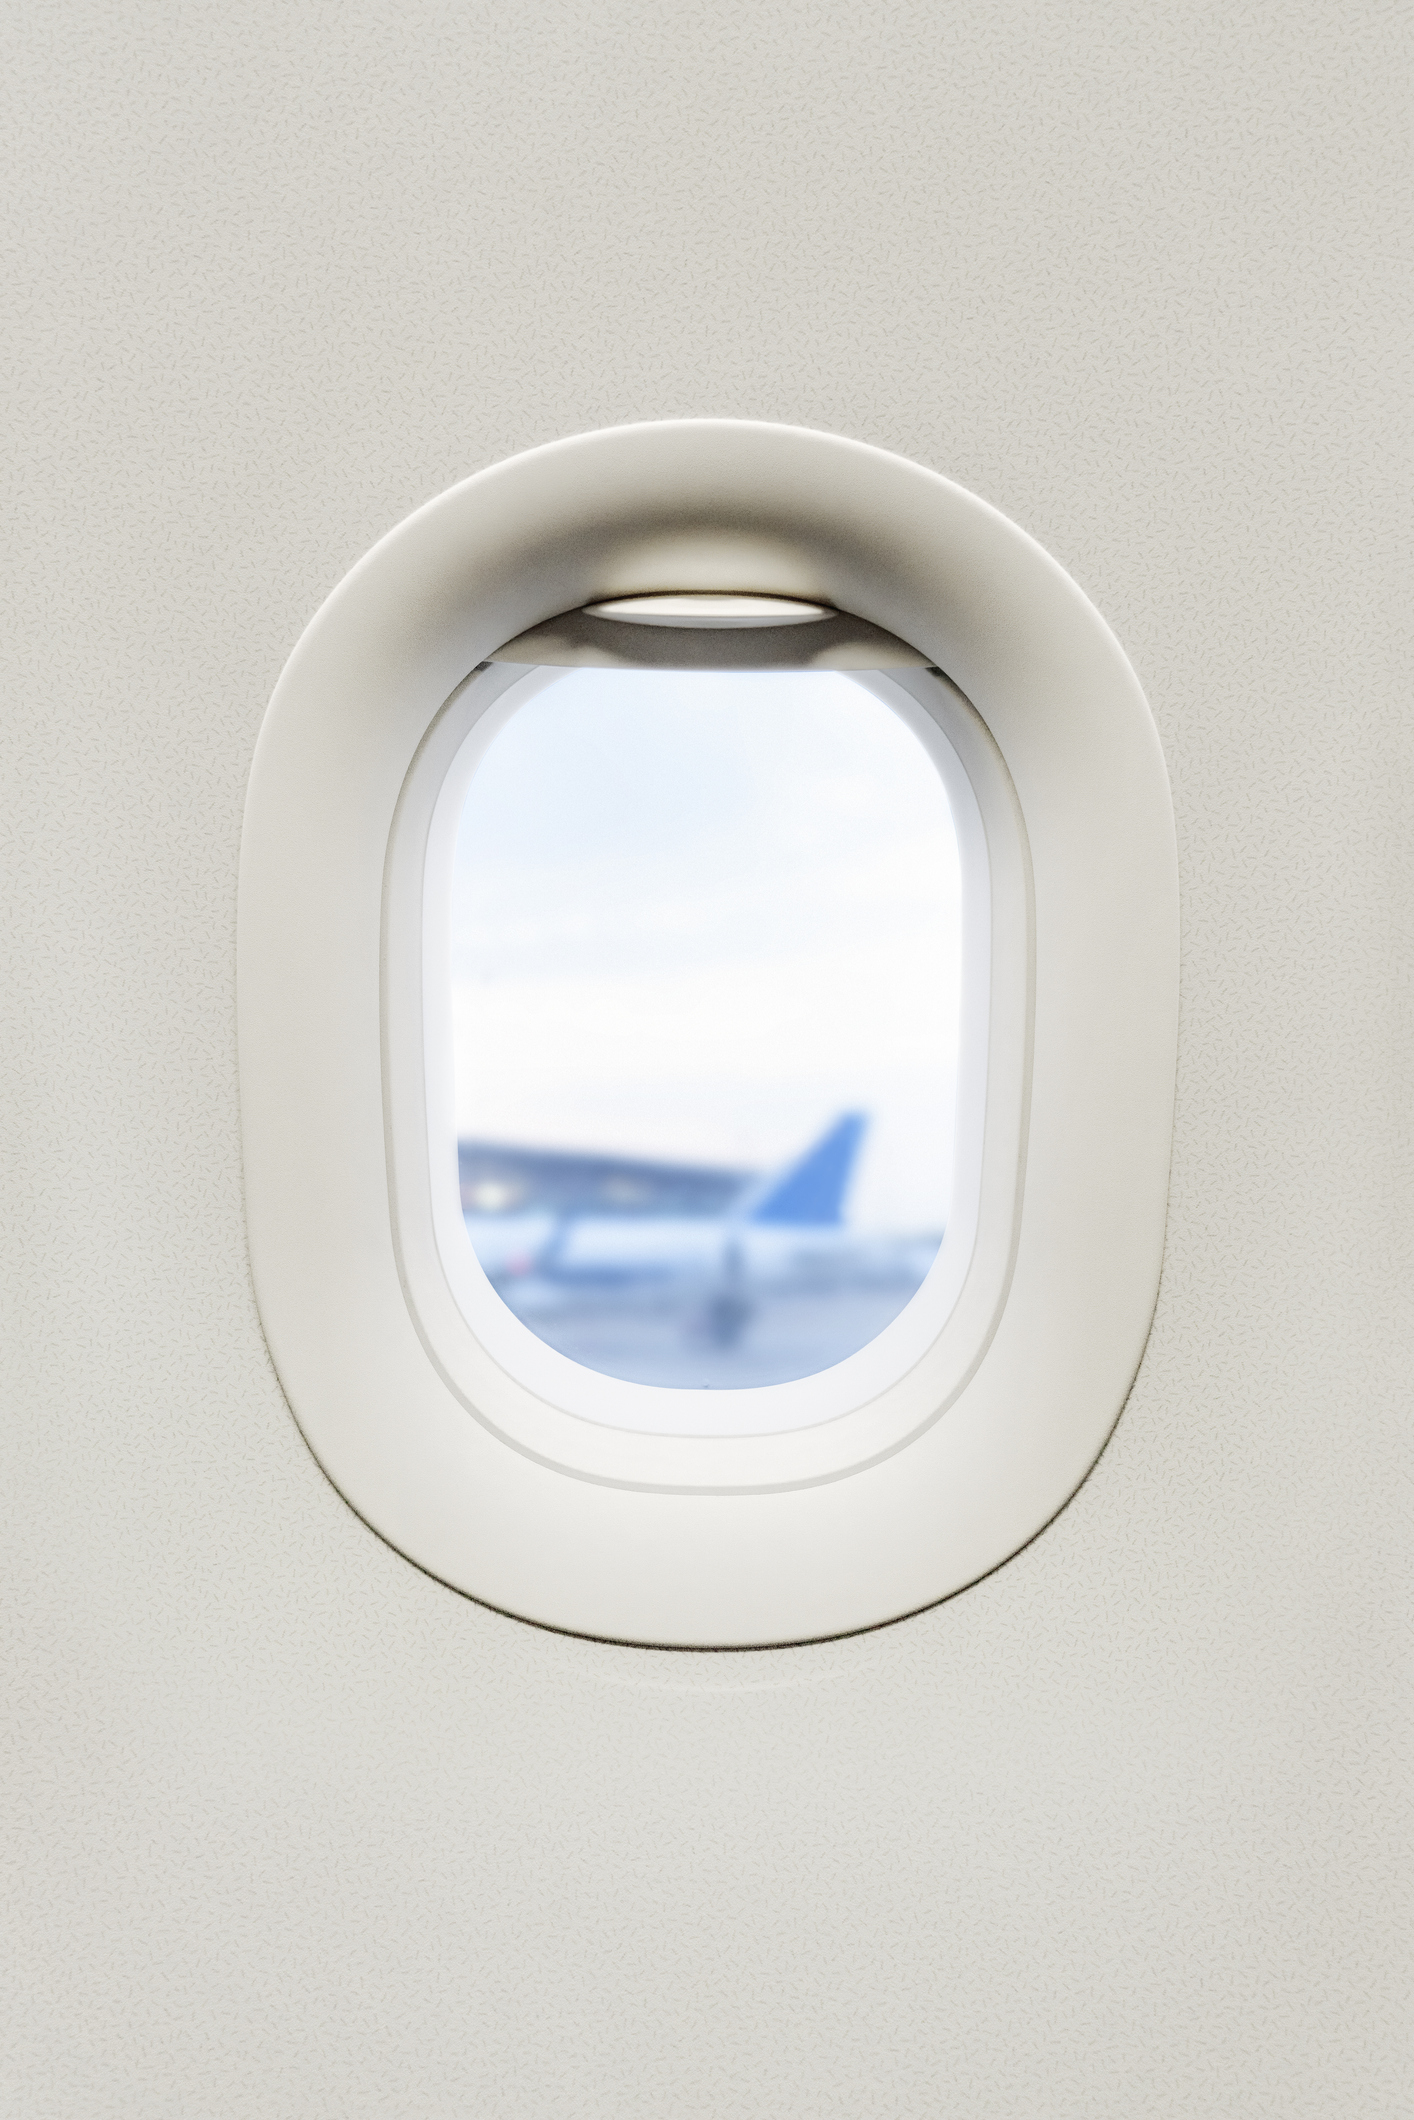 window to a plane